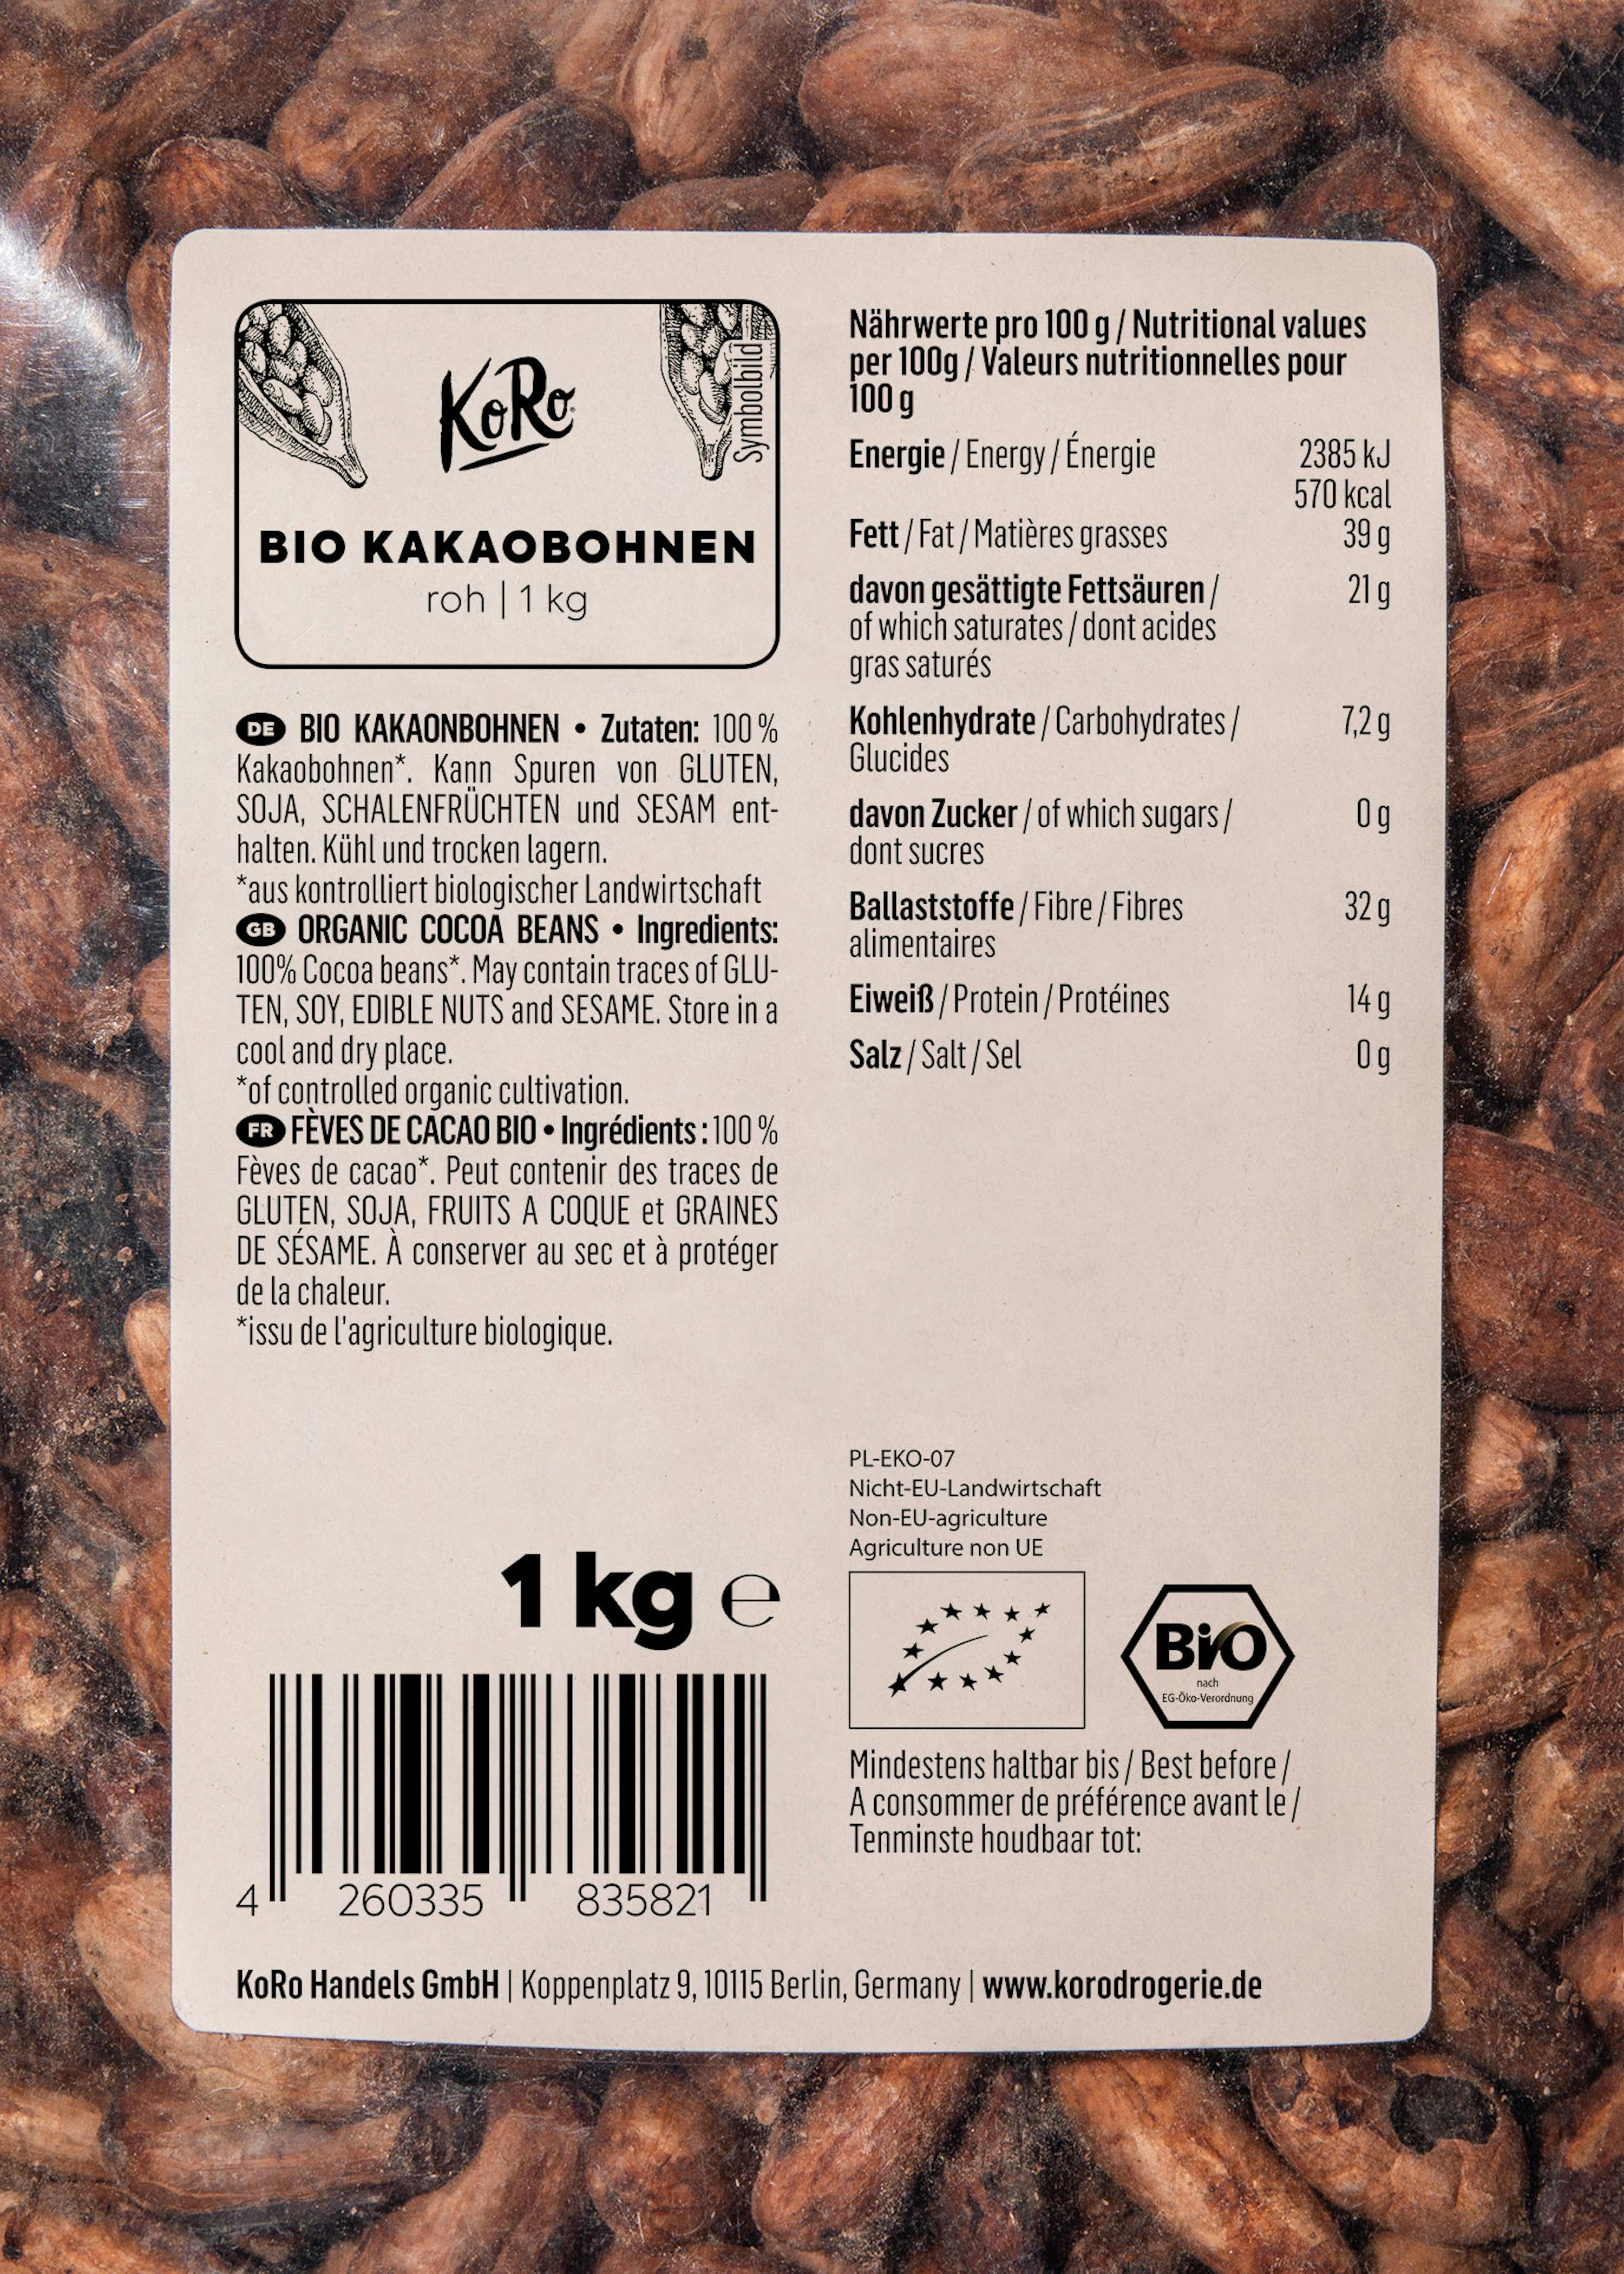 Beurre de cacao criollo cru bio 1kg - Nutri Naturel